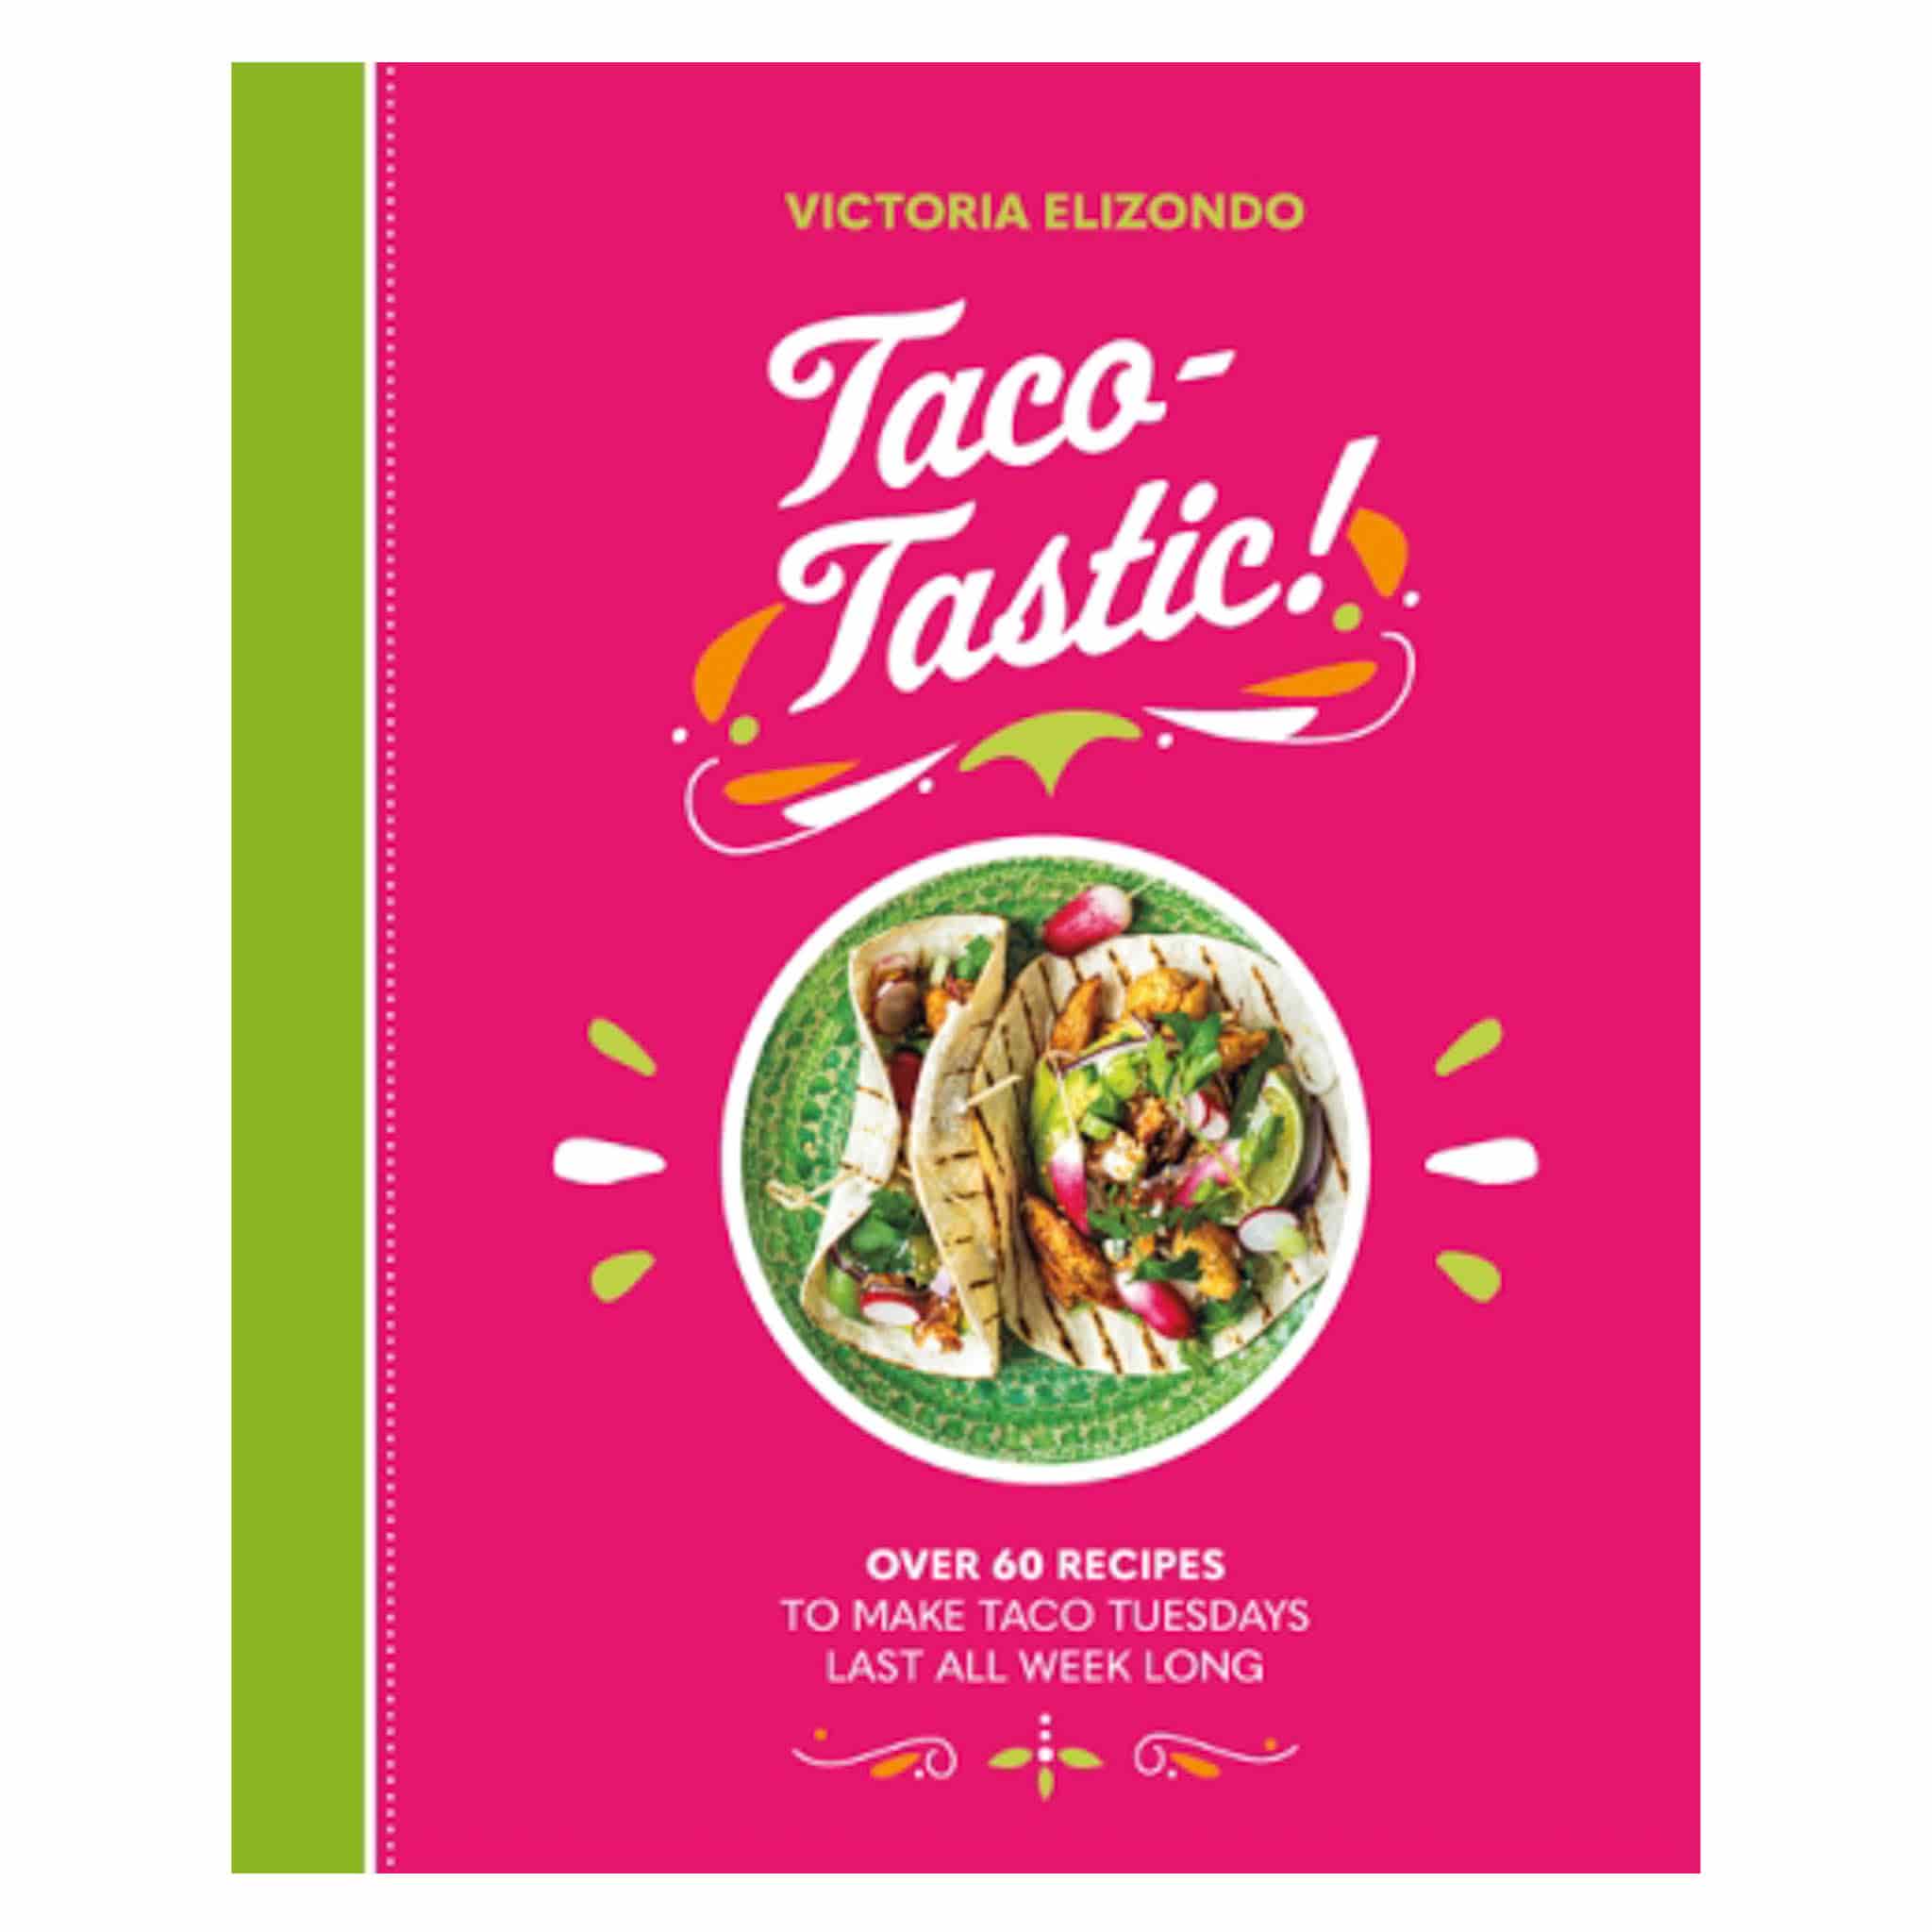 Taco-tastic: Over 60 Recipes to Make Taco Tuesdays Last All Week Long, by Victoria Elizondo